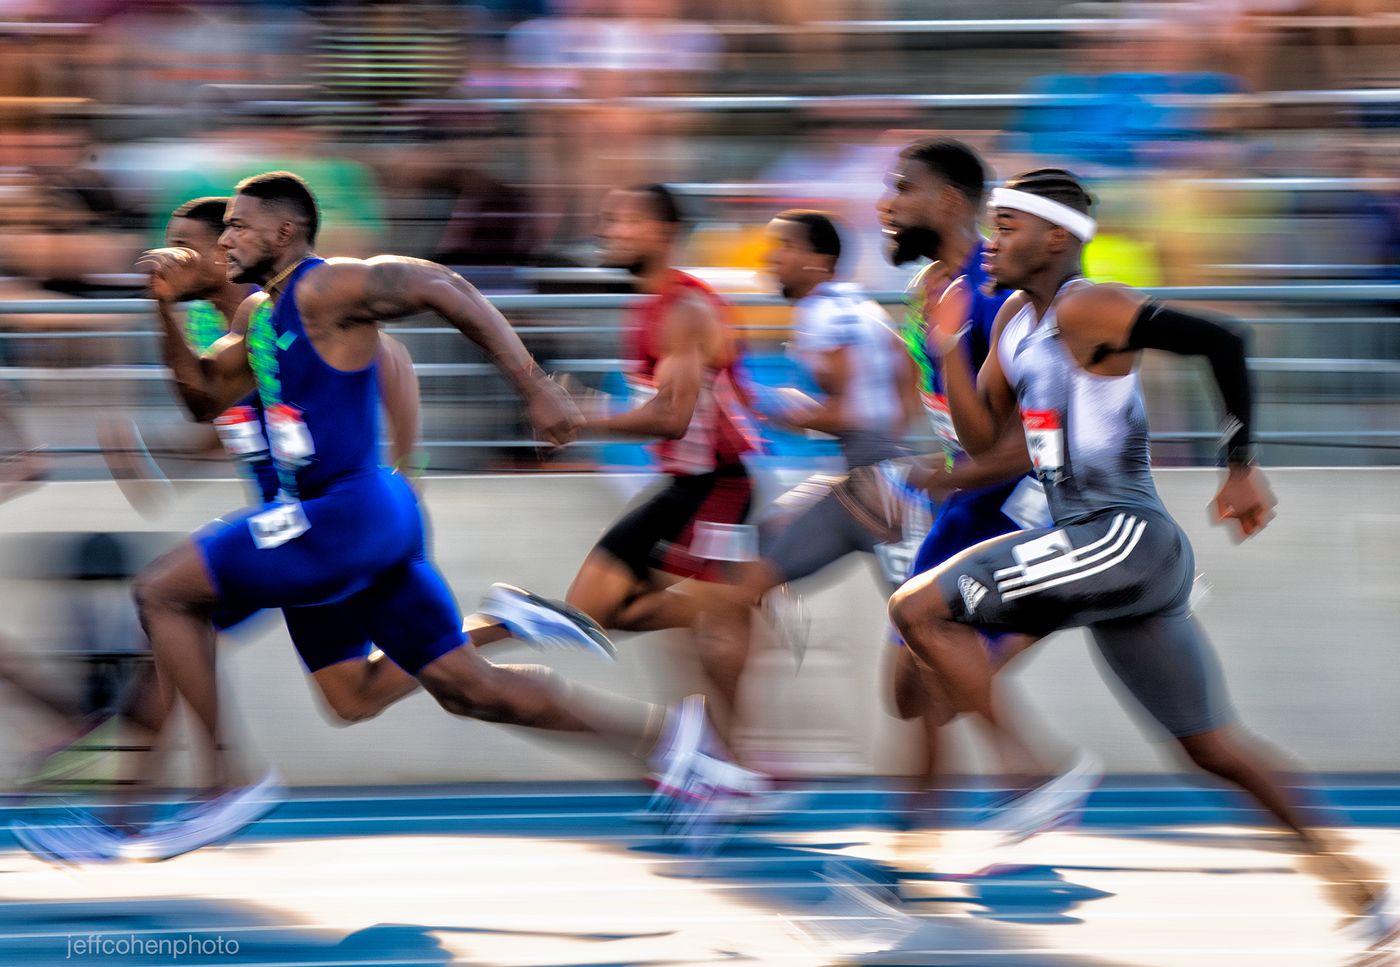 2019-USATF-Outdoor-Champs-day-2-gatlin-100m-blur--1388---jeff-cohen-photo--web.jpg